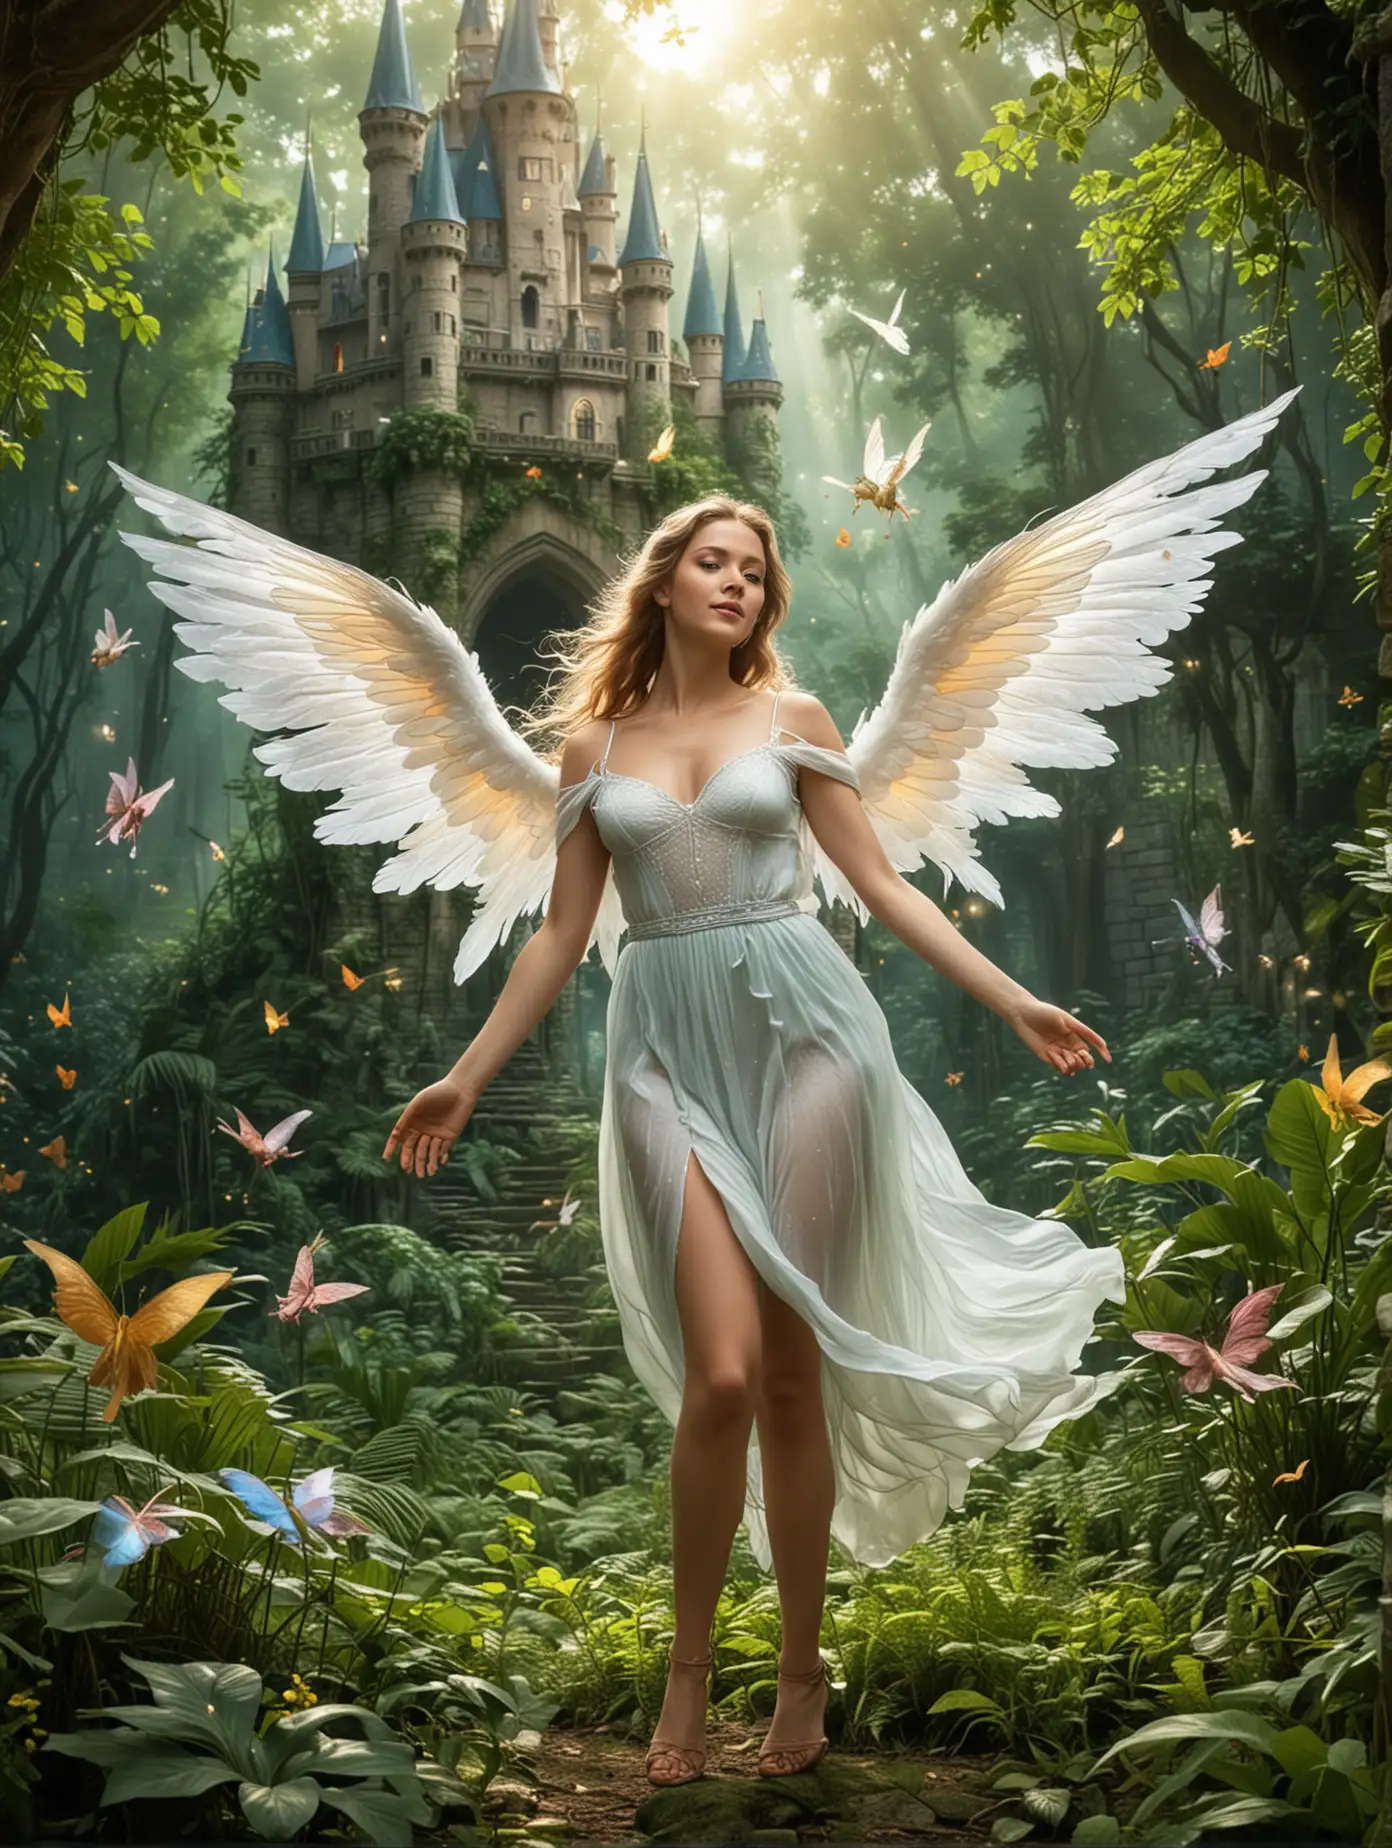 Enchanting-Angel-Praying-Amidst-Flying-Fairies-in-Jungle-Near-Castle